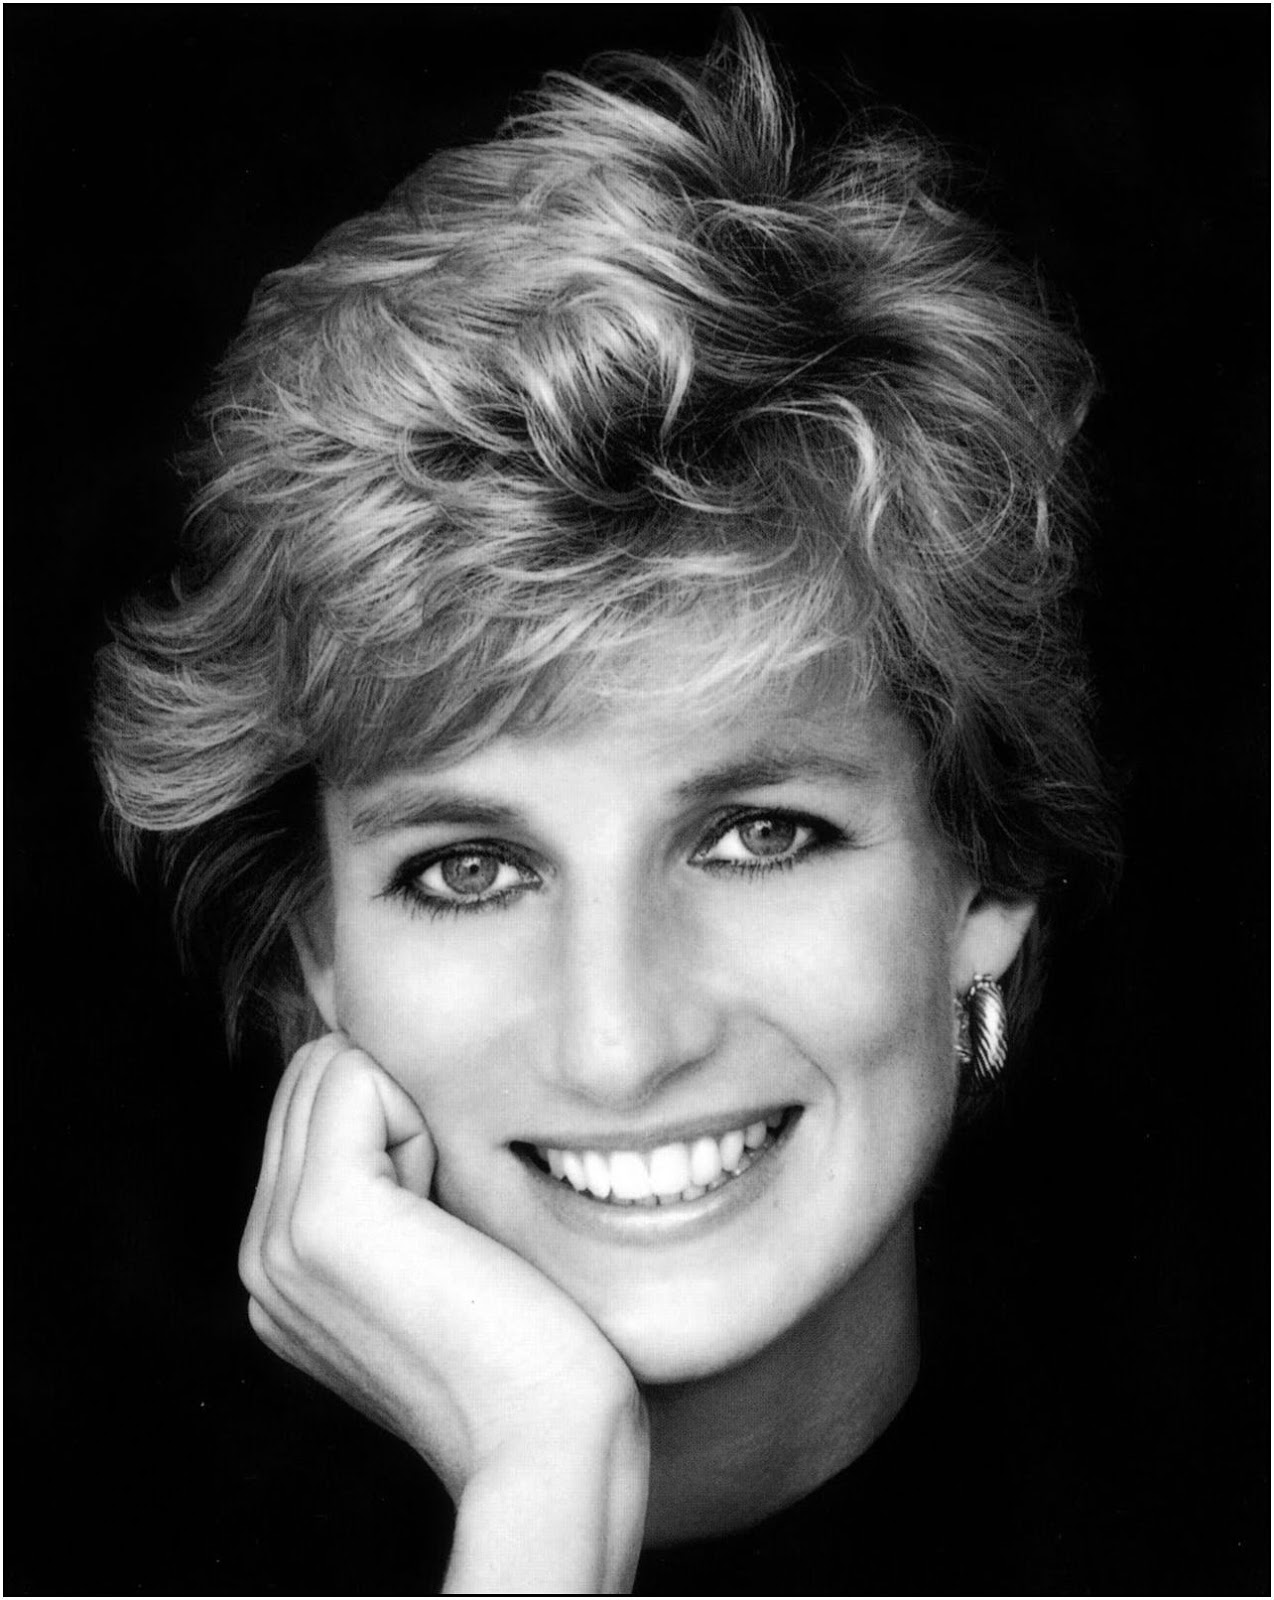 EPHEMERAL ARC: Diana: The People's Princess - Part 1